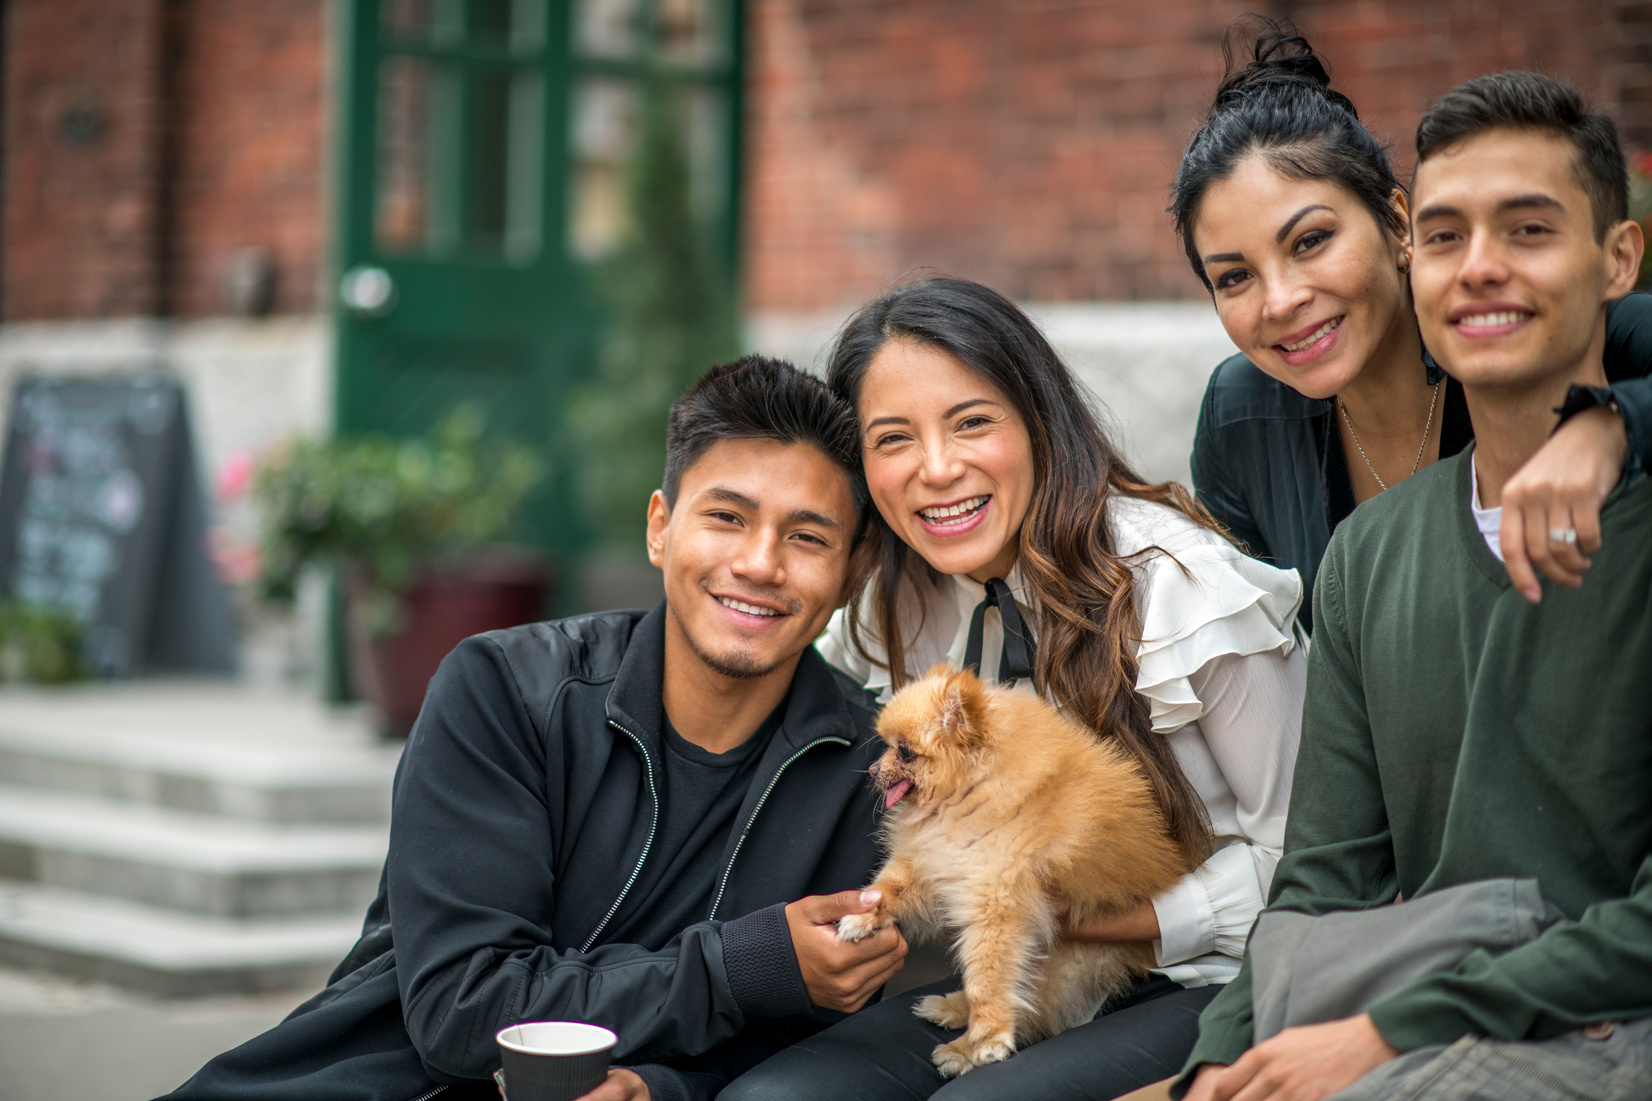 Latino/hispanic family photo of four beautiful people